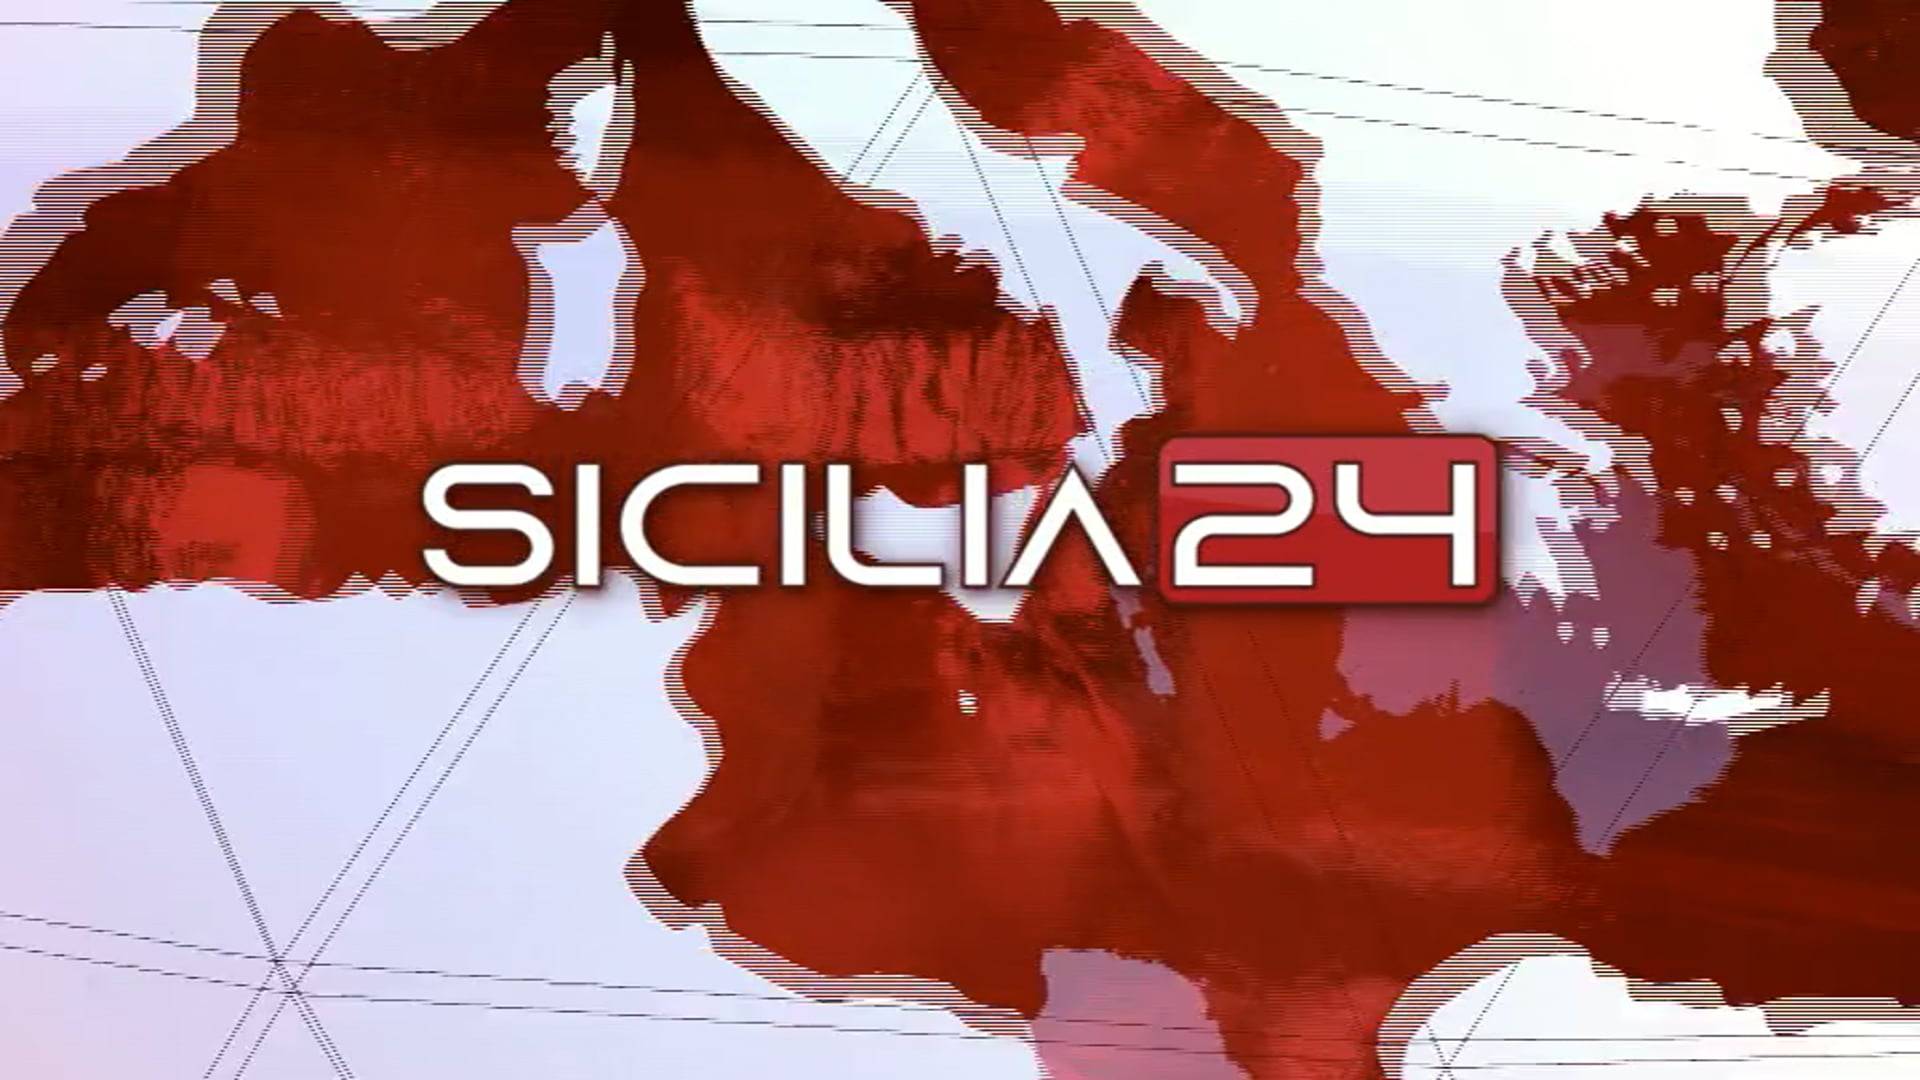 sicilia24-rassegna-stampa-19-marzo-2022-vimeo-thumbnail.jpg